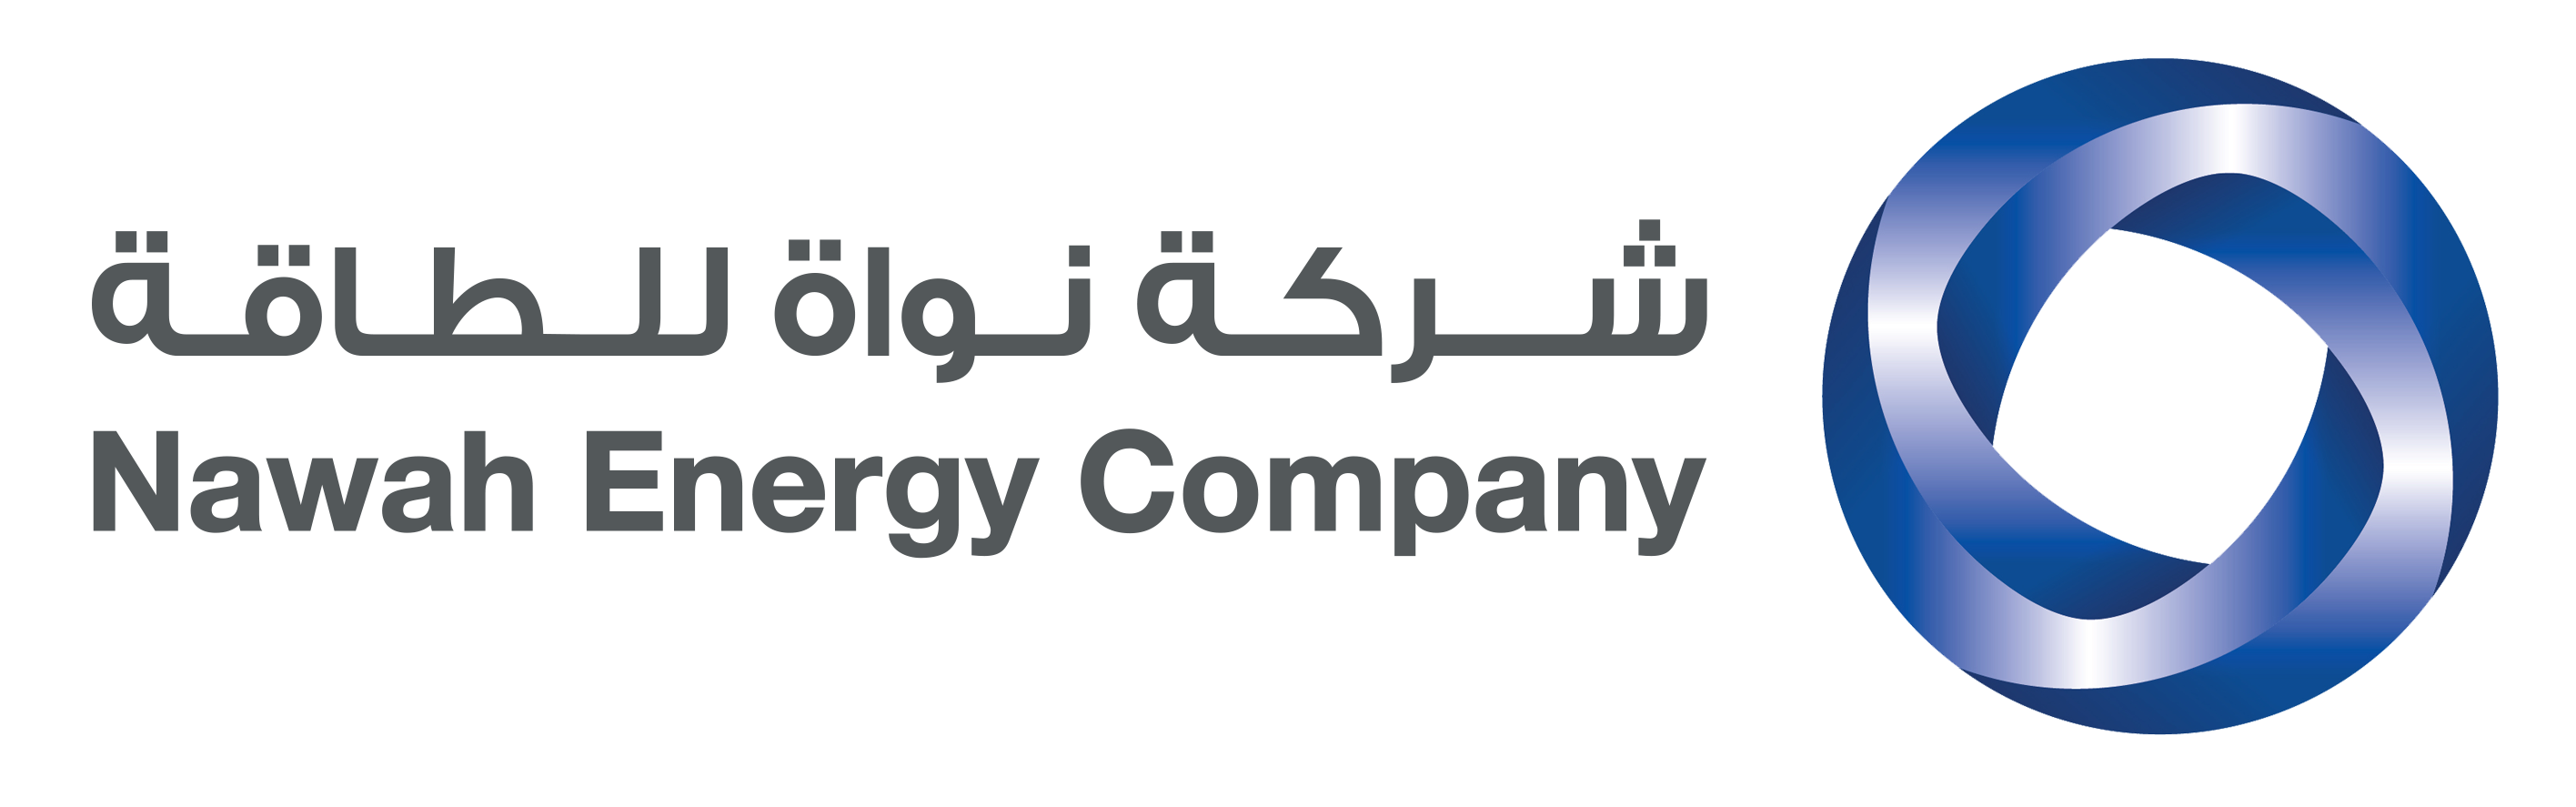 nawah-energy-company-logo-5fd0fe689b752-619bdda981340.png (original)